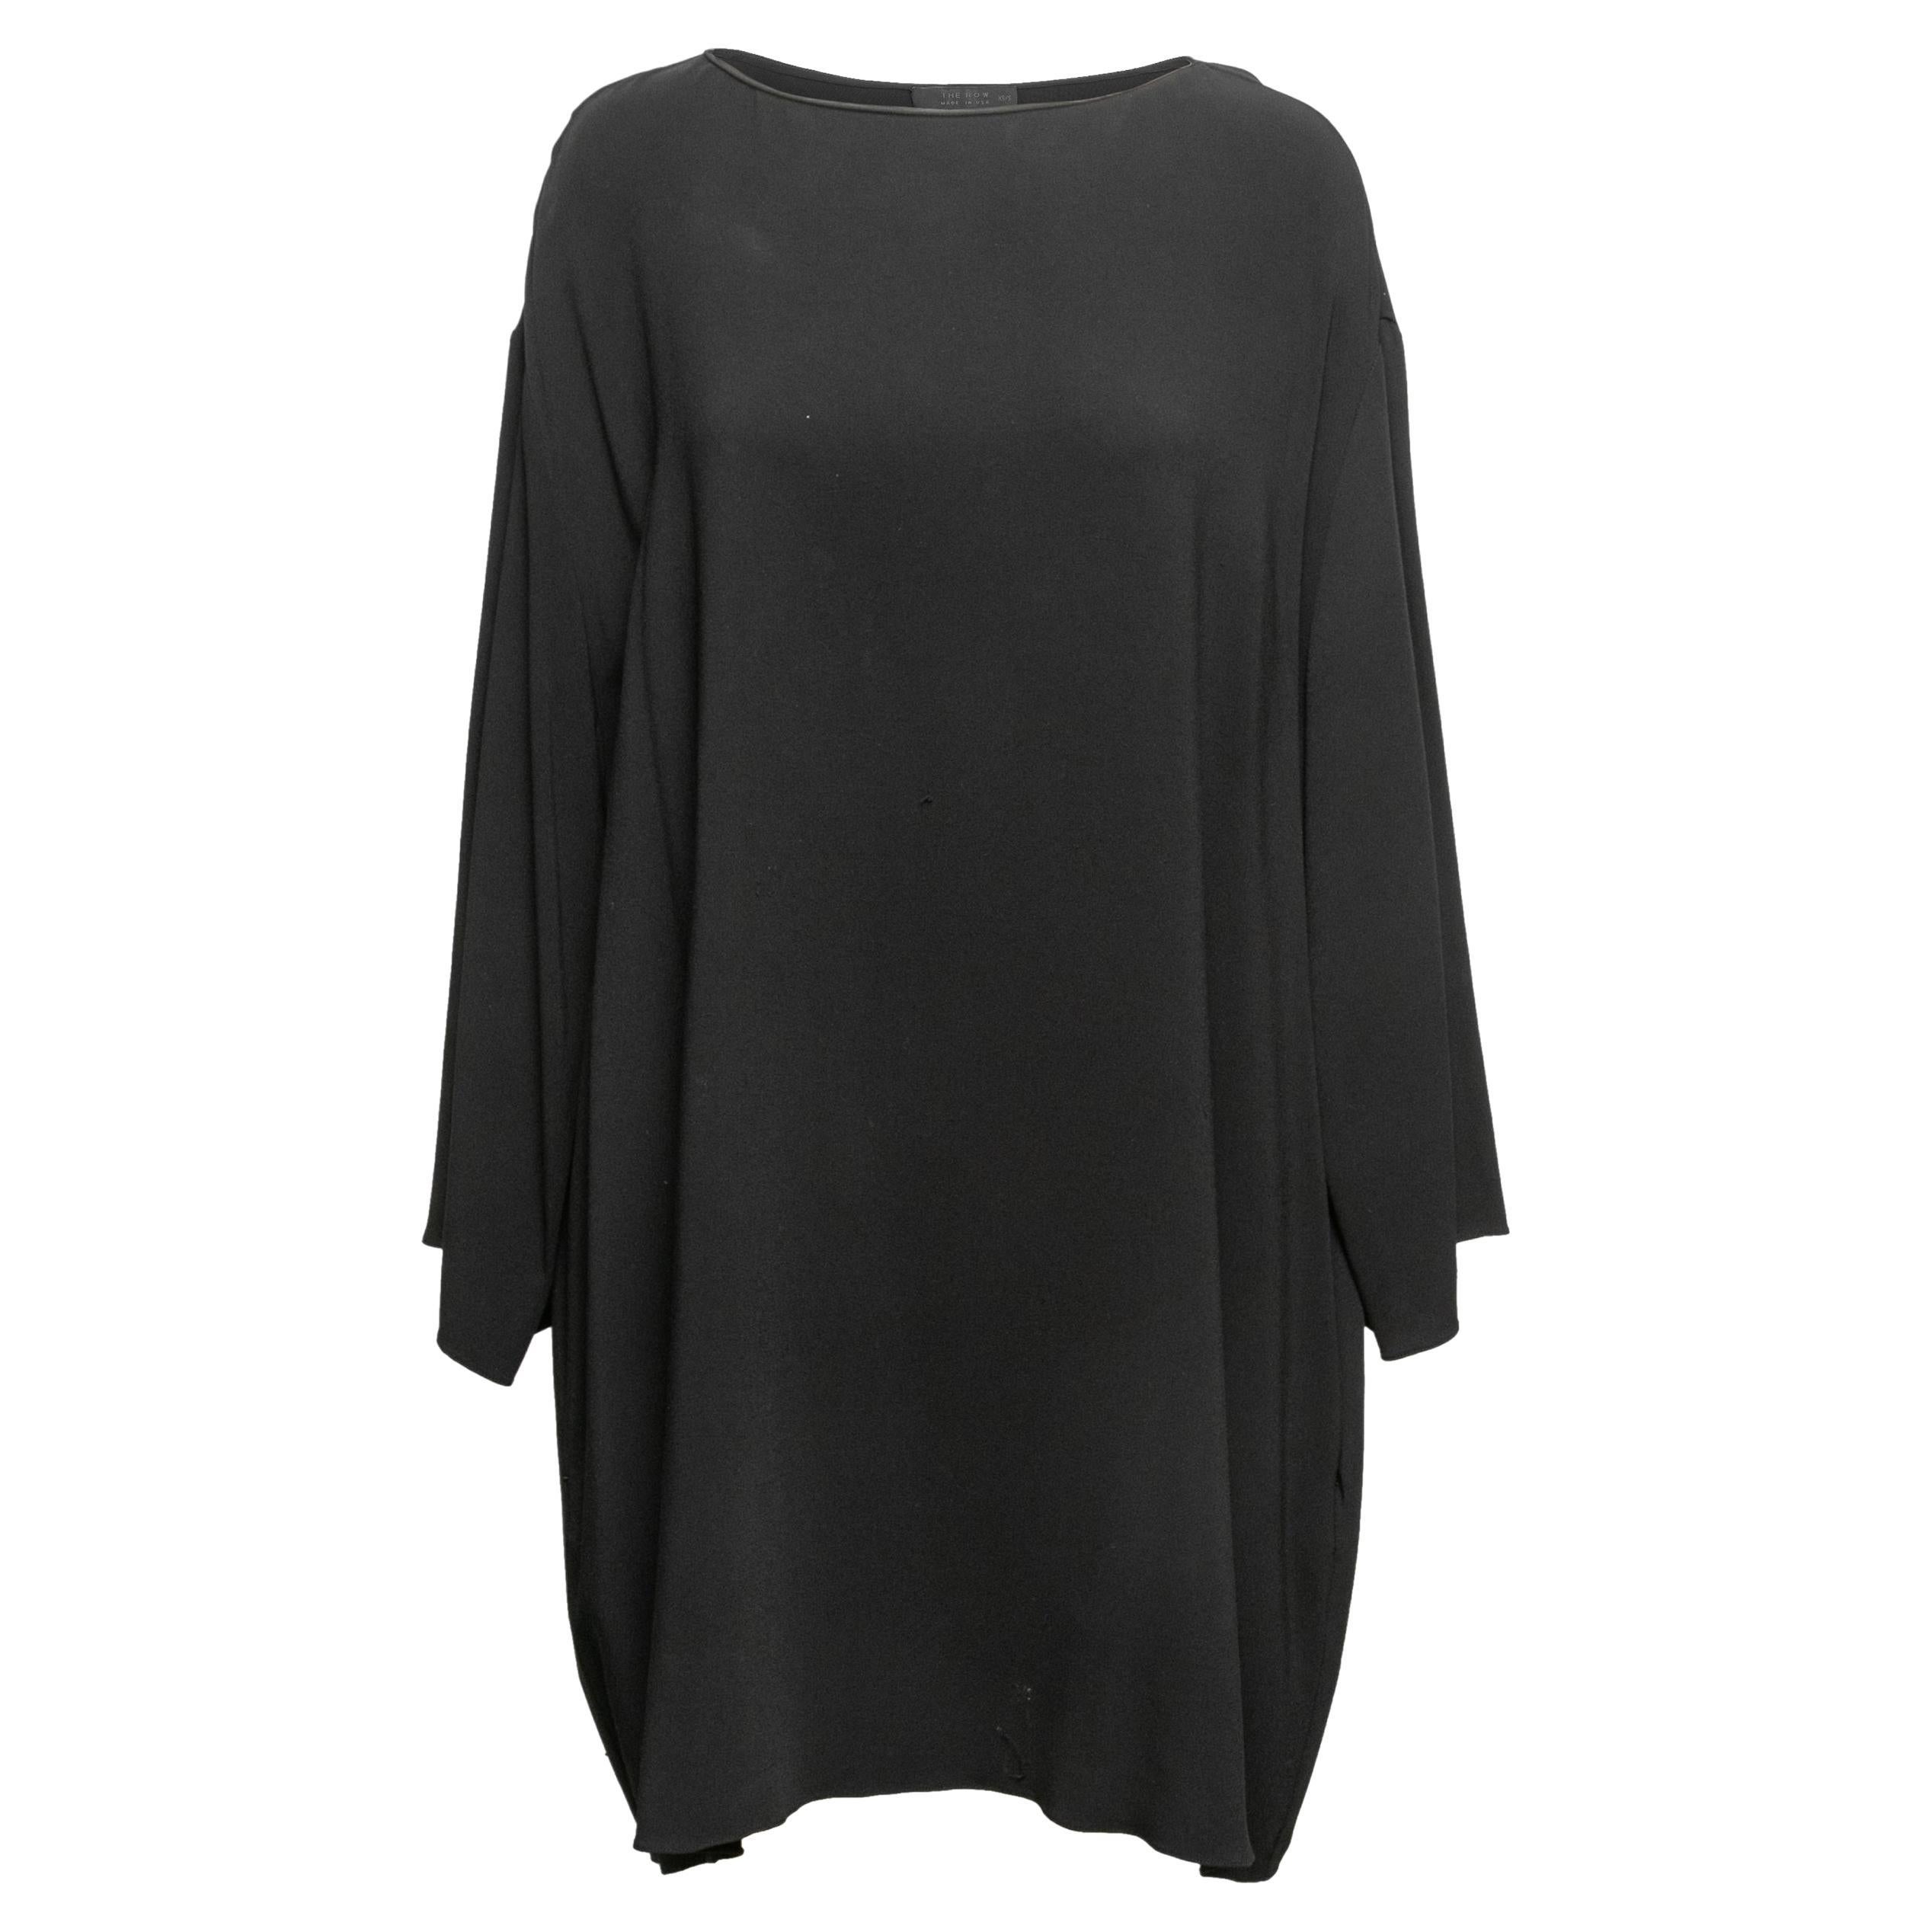 Black The Row Bateau Neck Sweater Dress Size XS/S For Sale